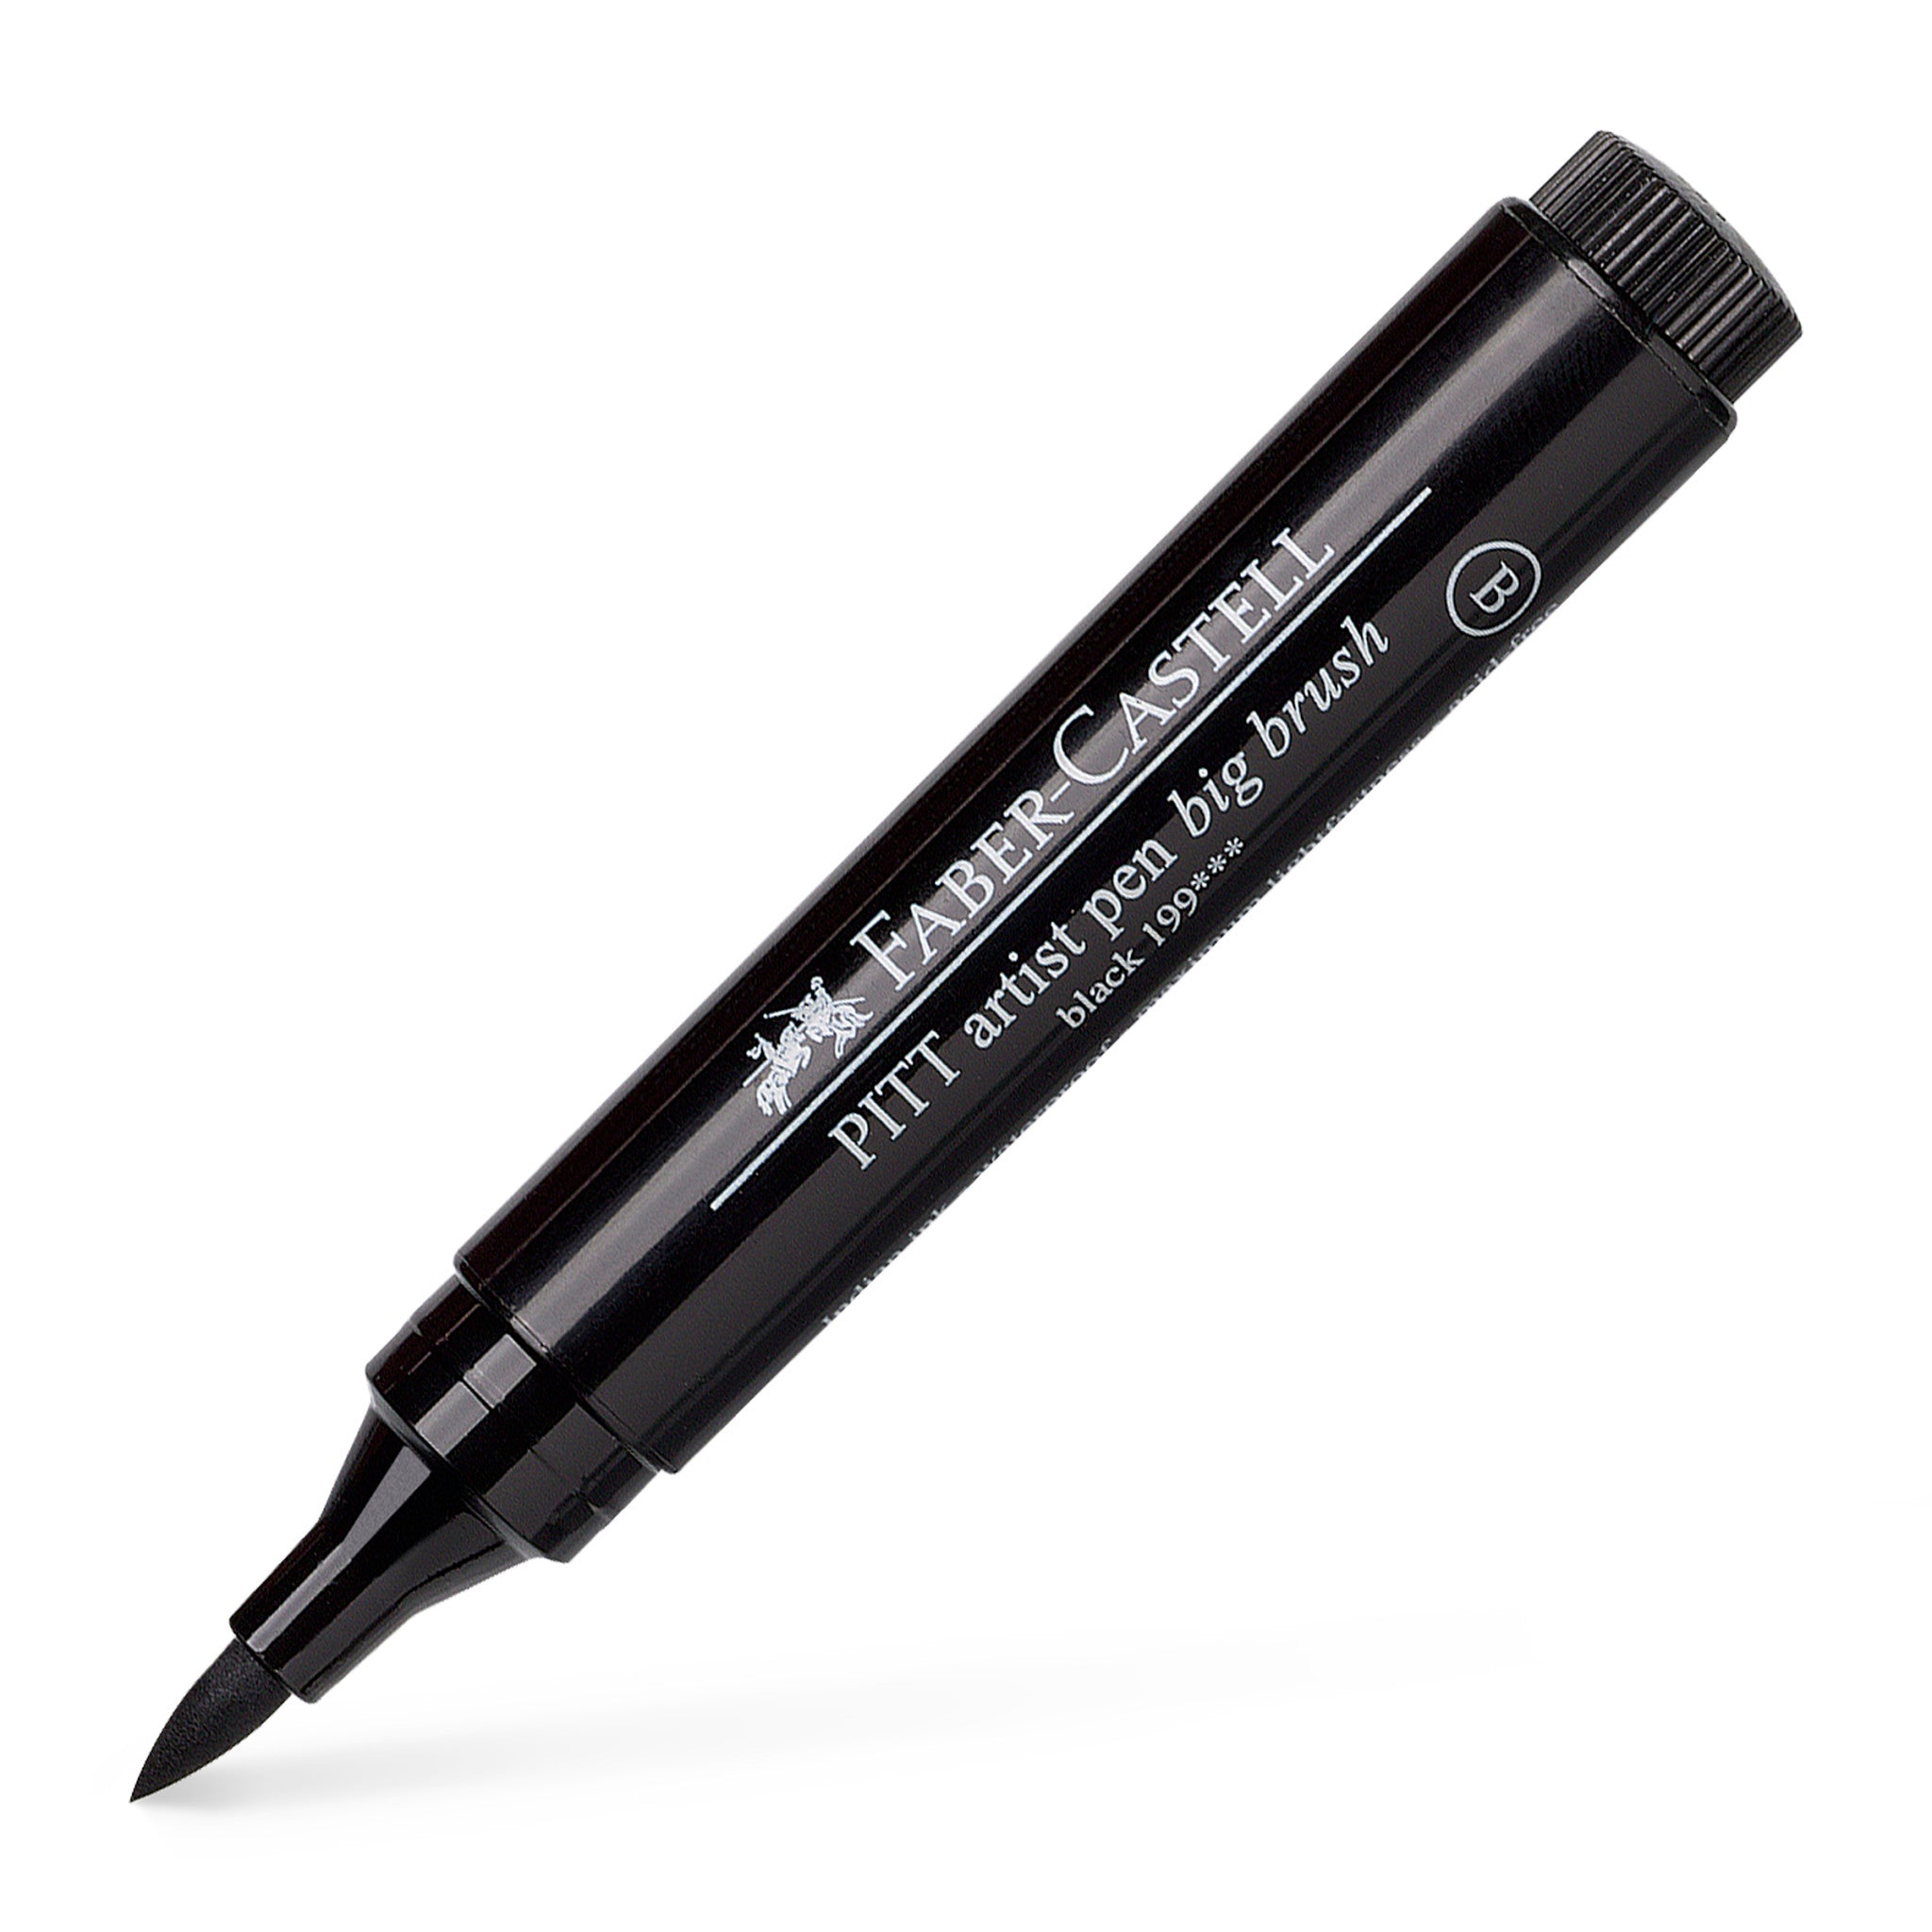 Faber-Castell Pitt Big Brush Pens - 4 Pack, Black No. 199